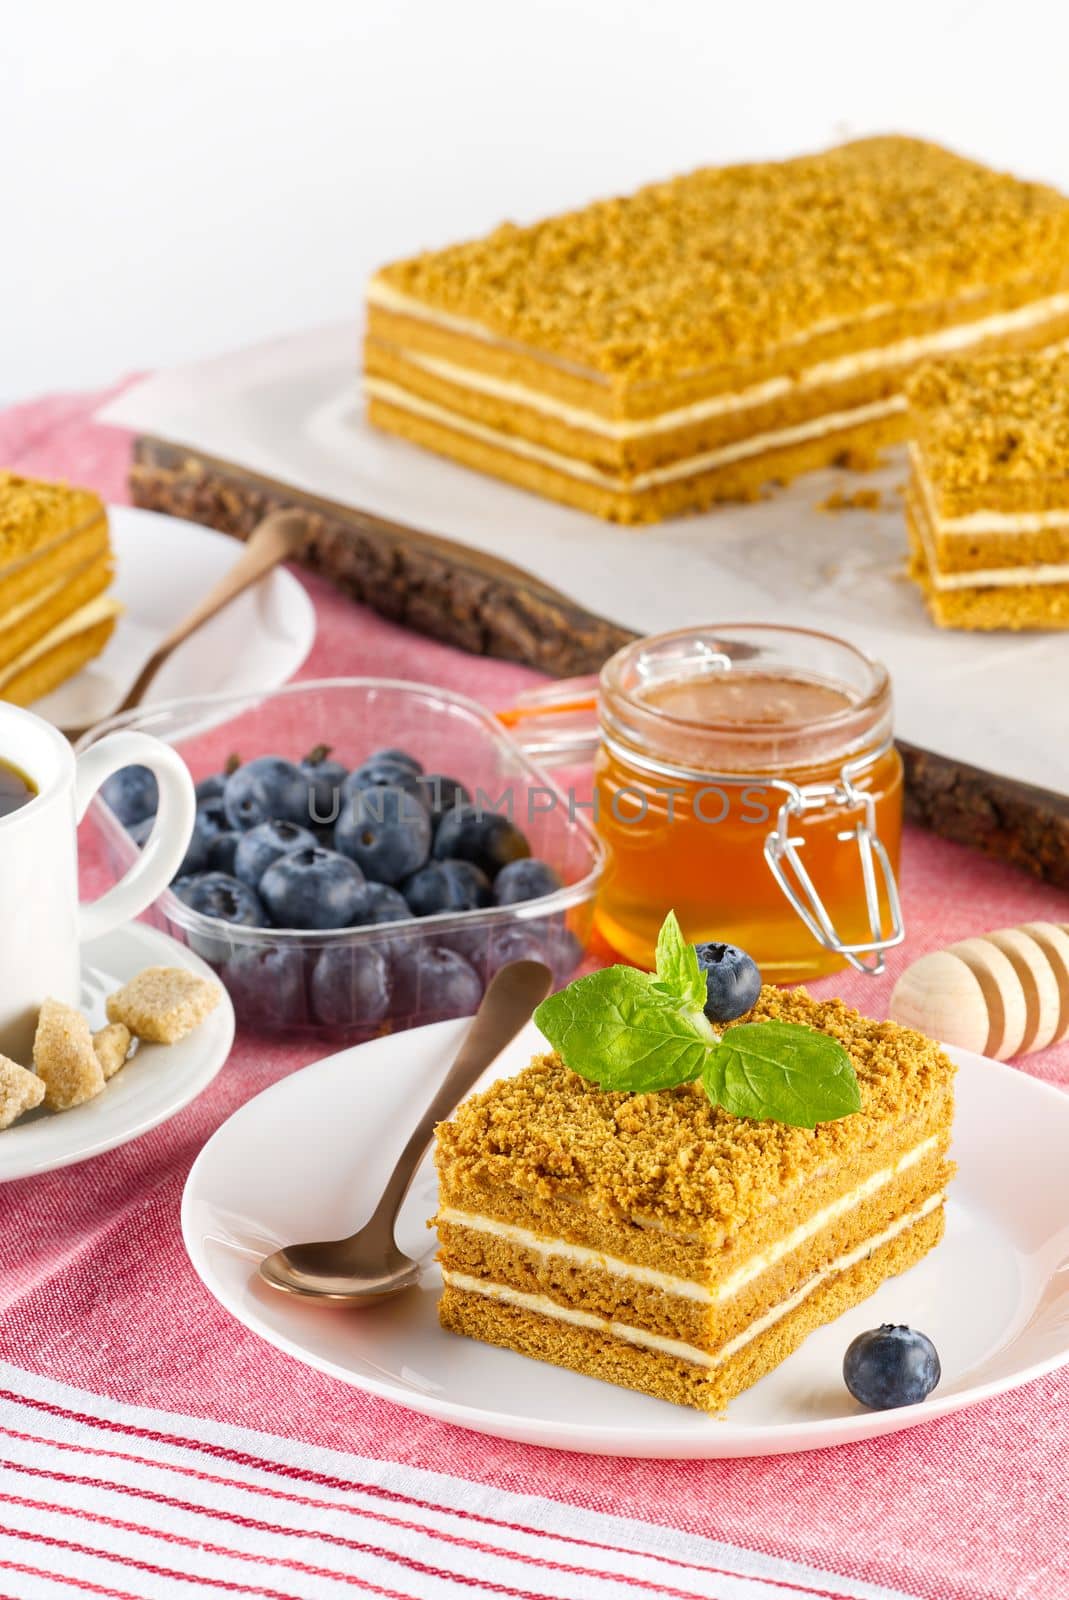 Homemade Honey cake. Honey cake Medovik, layer cake on white plate. Closeup view. sweet dessert cake. Slice of layered honey cake selective focus.